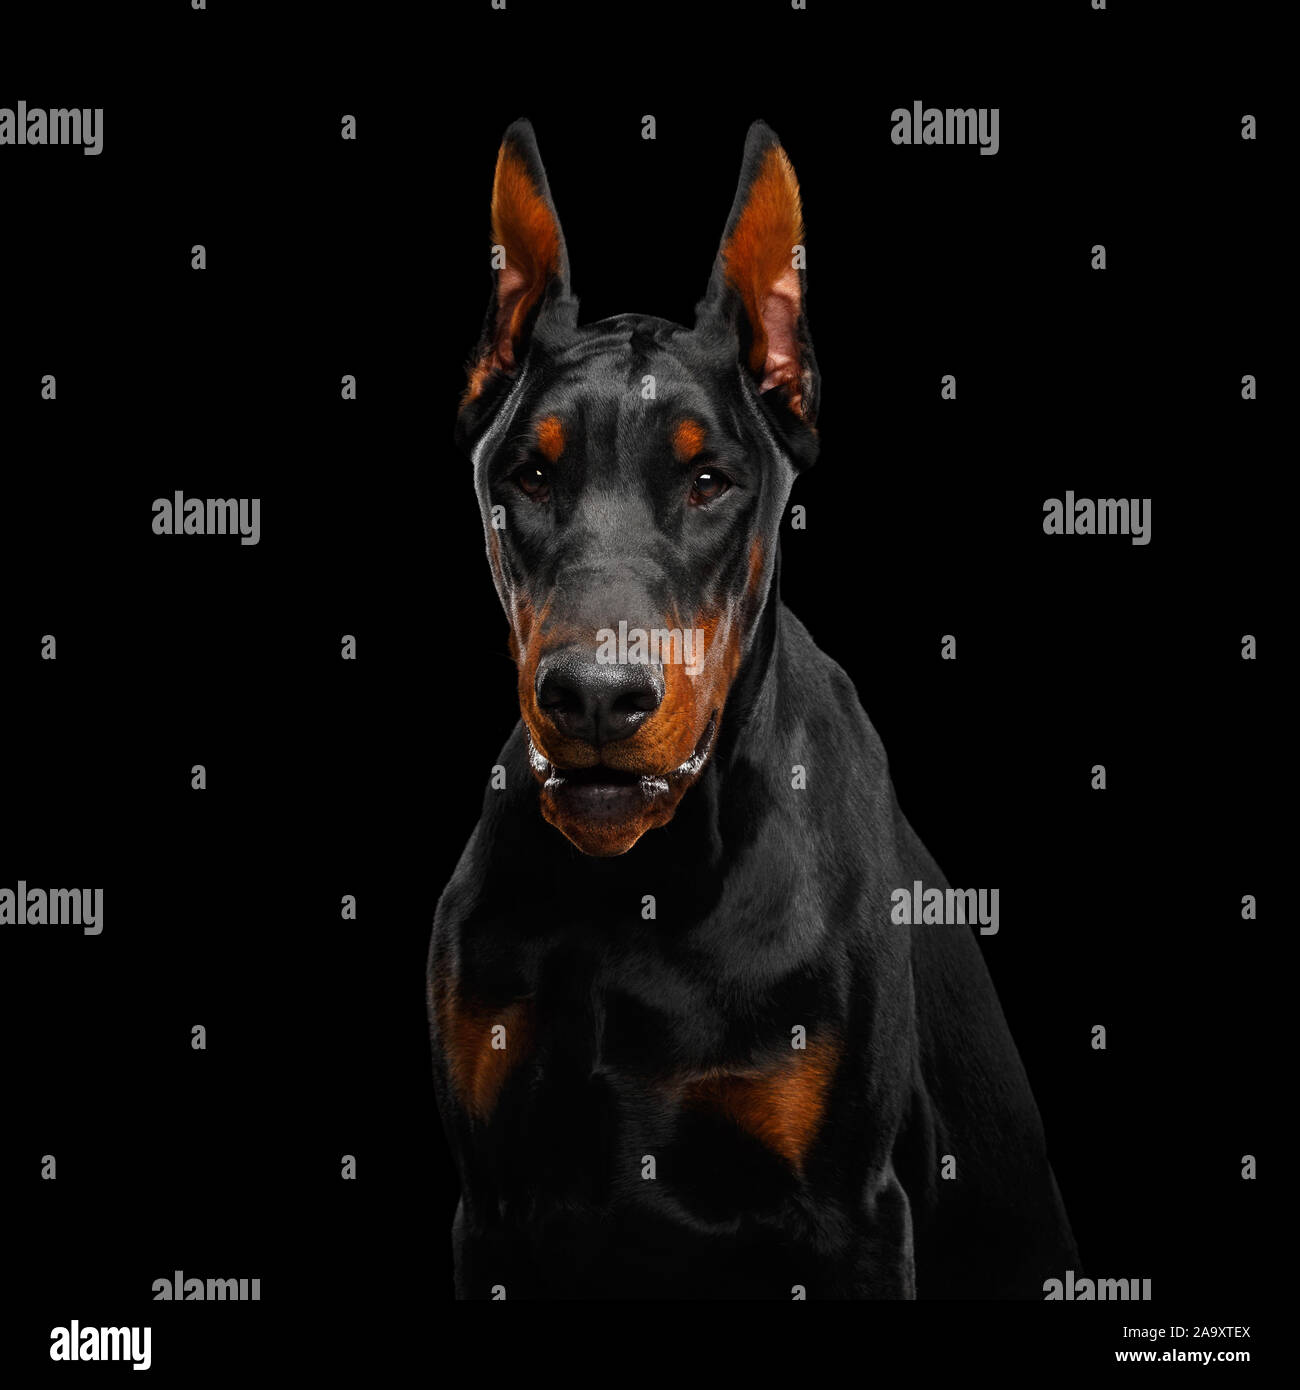 Portrait of Angry Doberman Dog looks menacing on isolated Black background Stock Photo